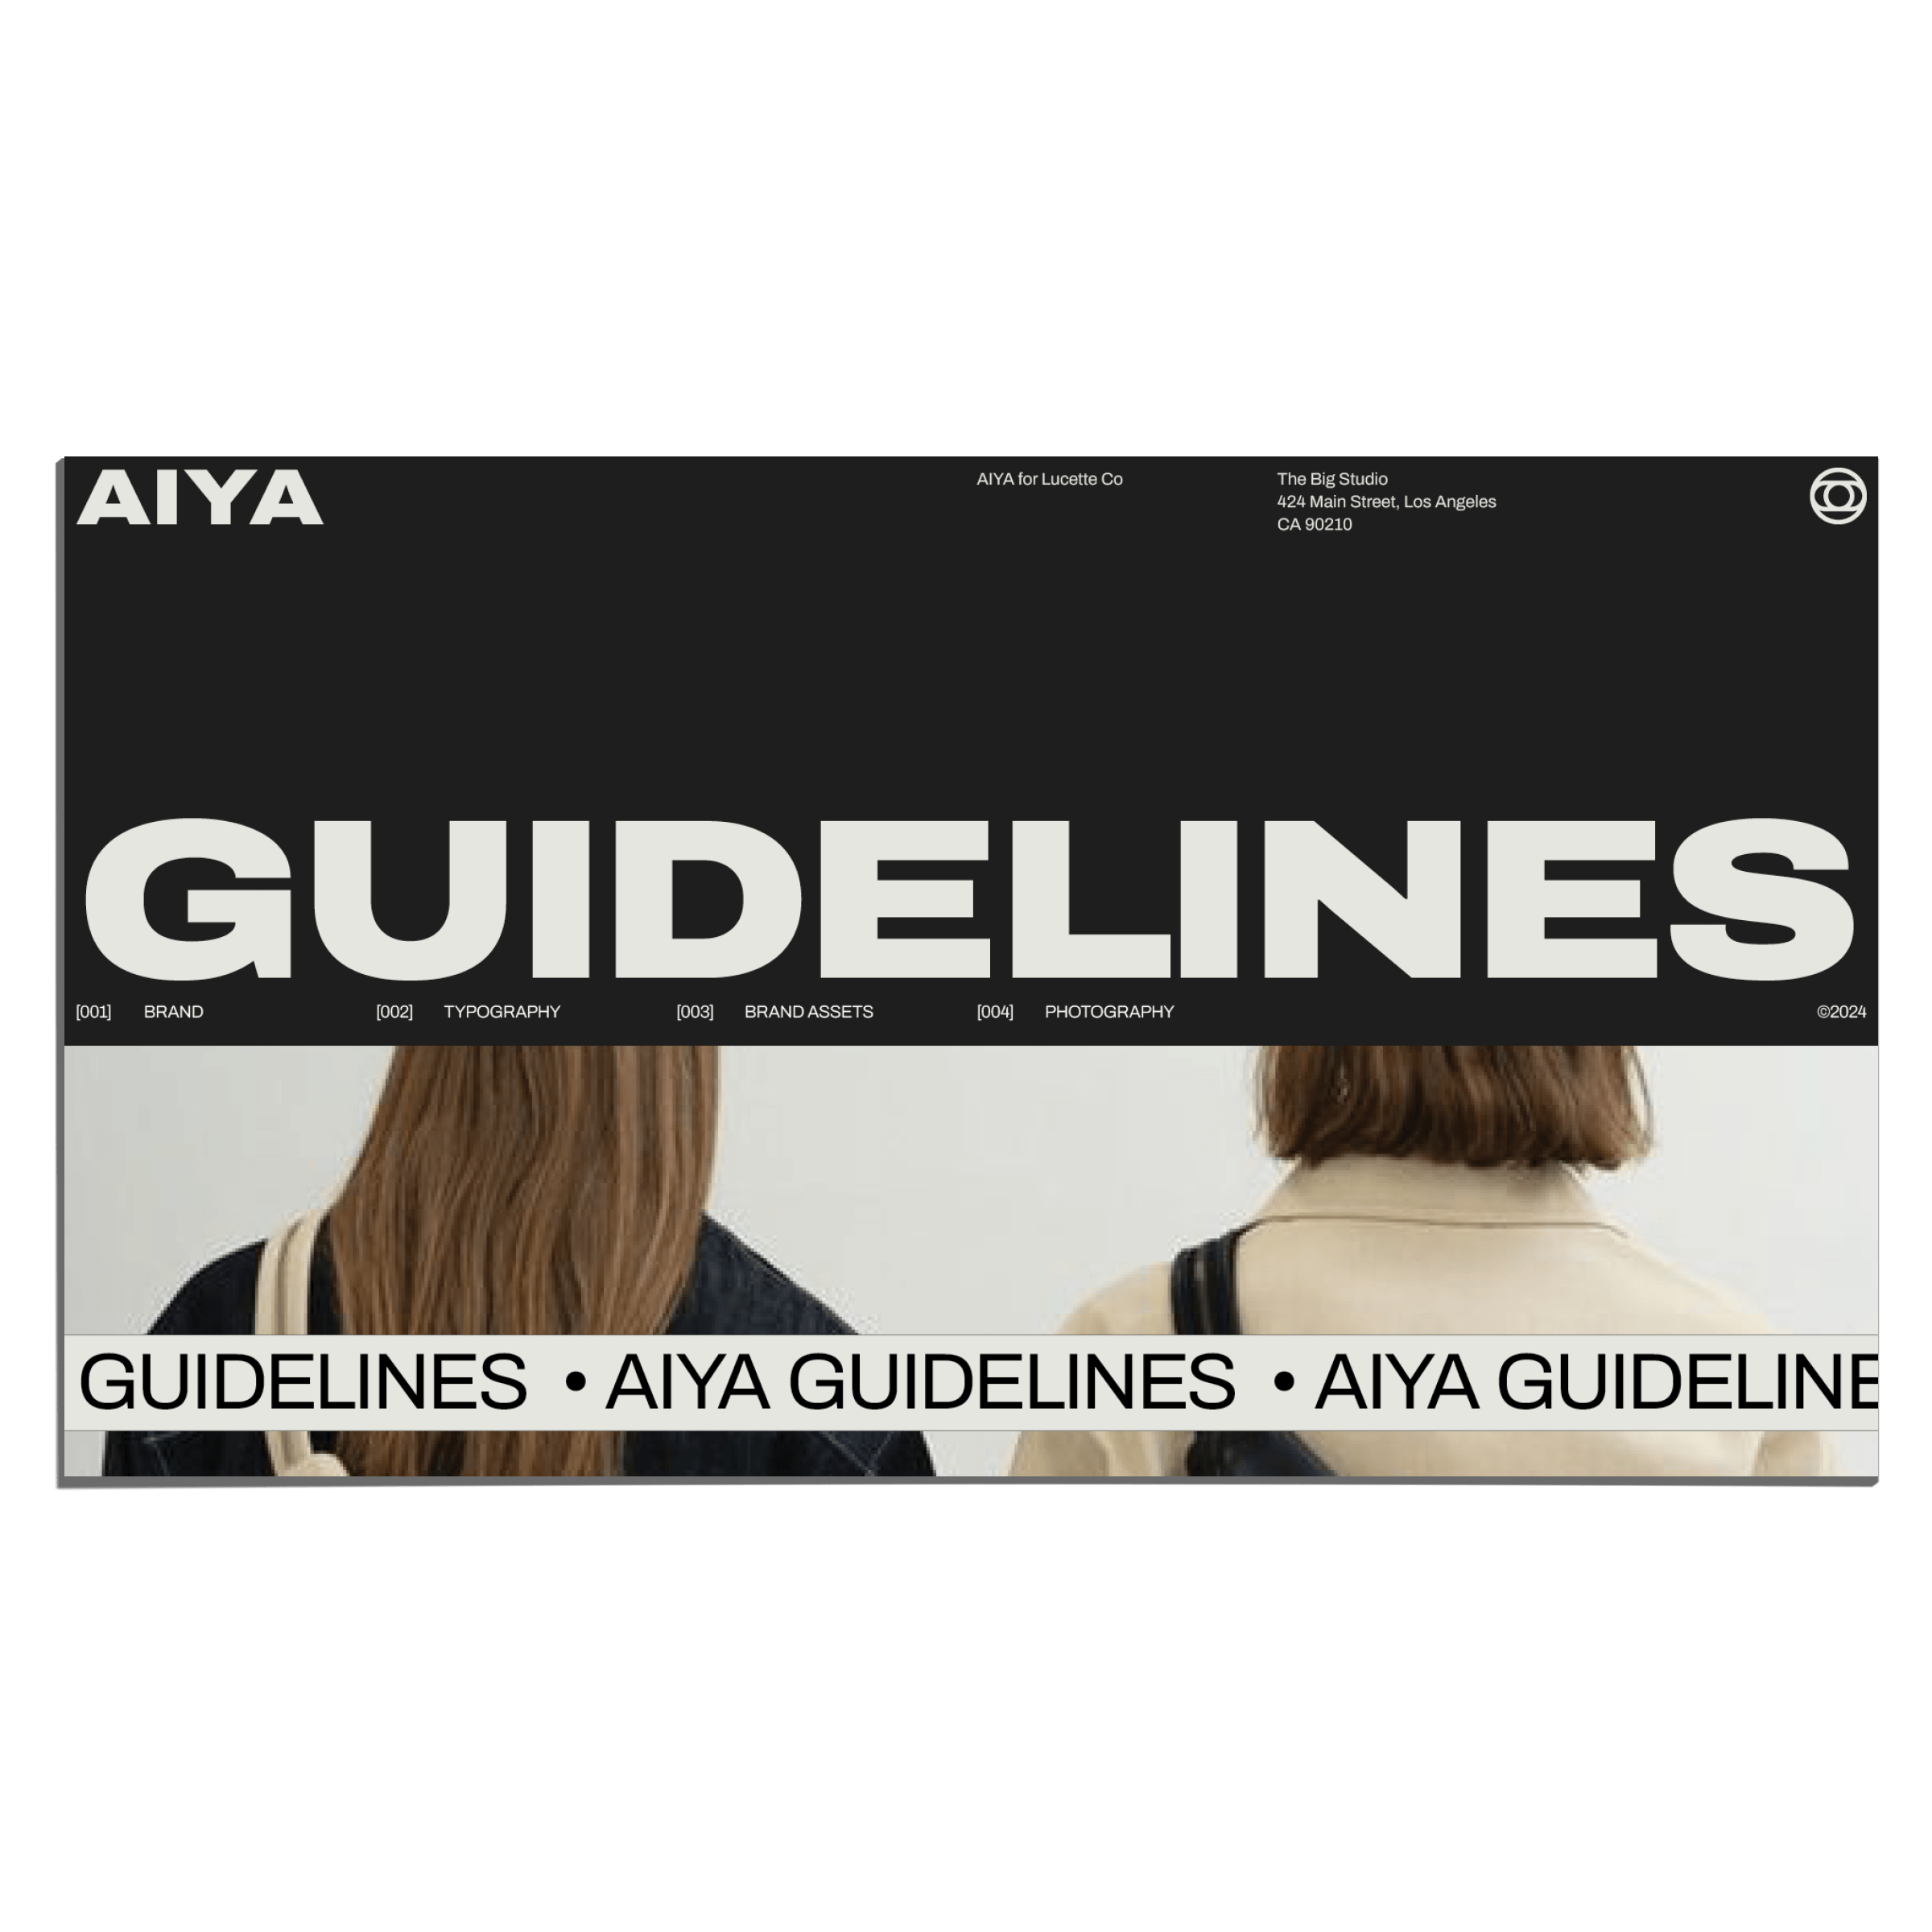 AIYA Brand Guidelines